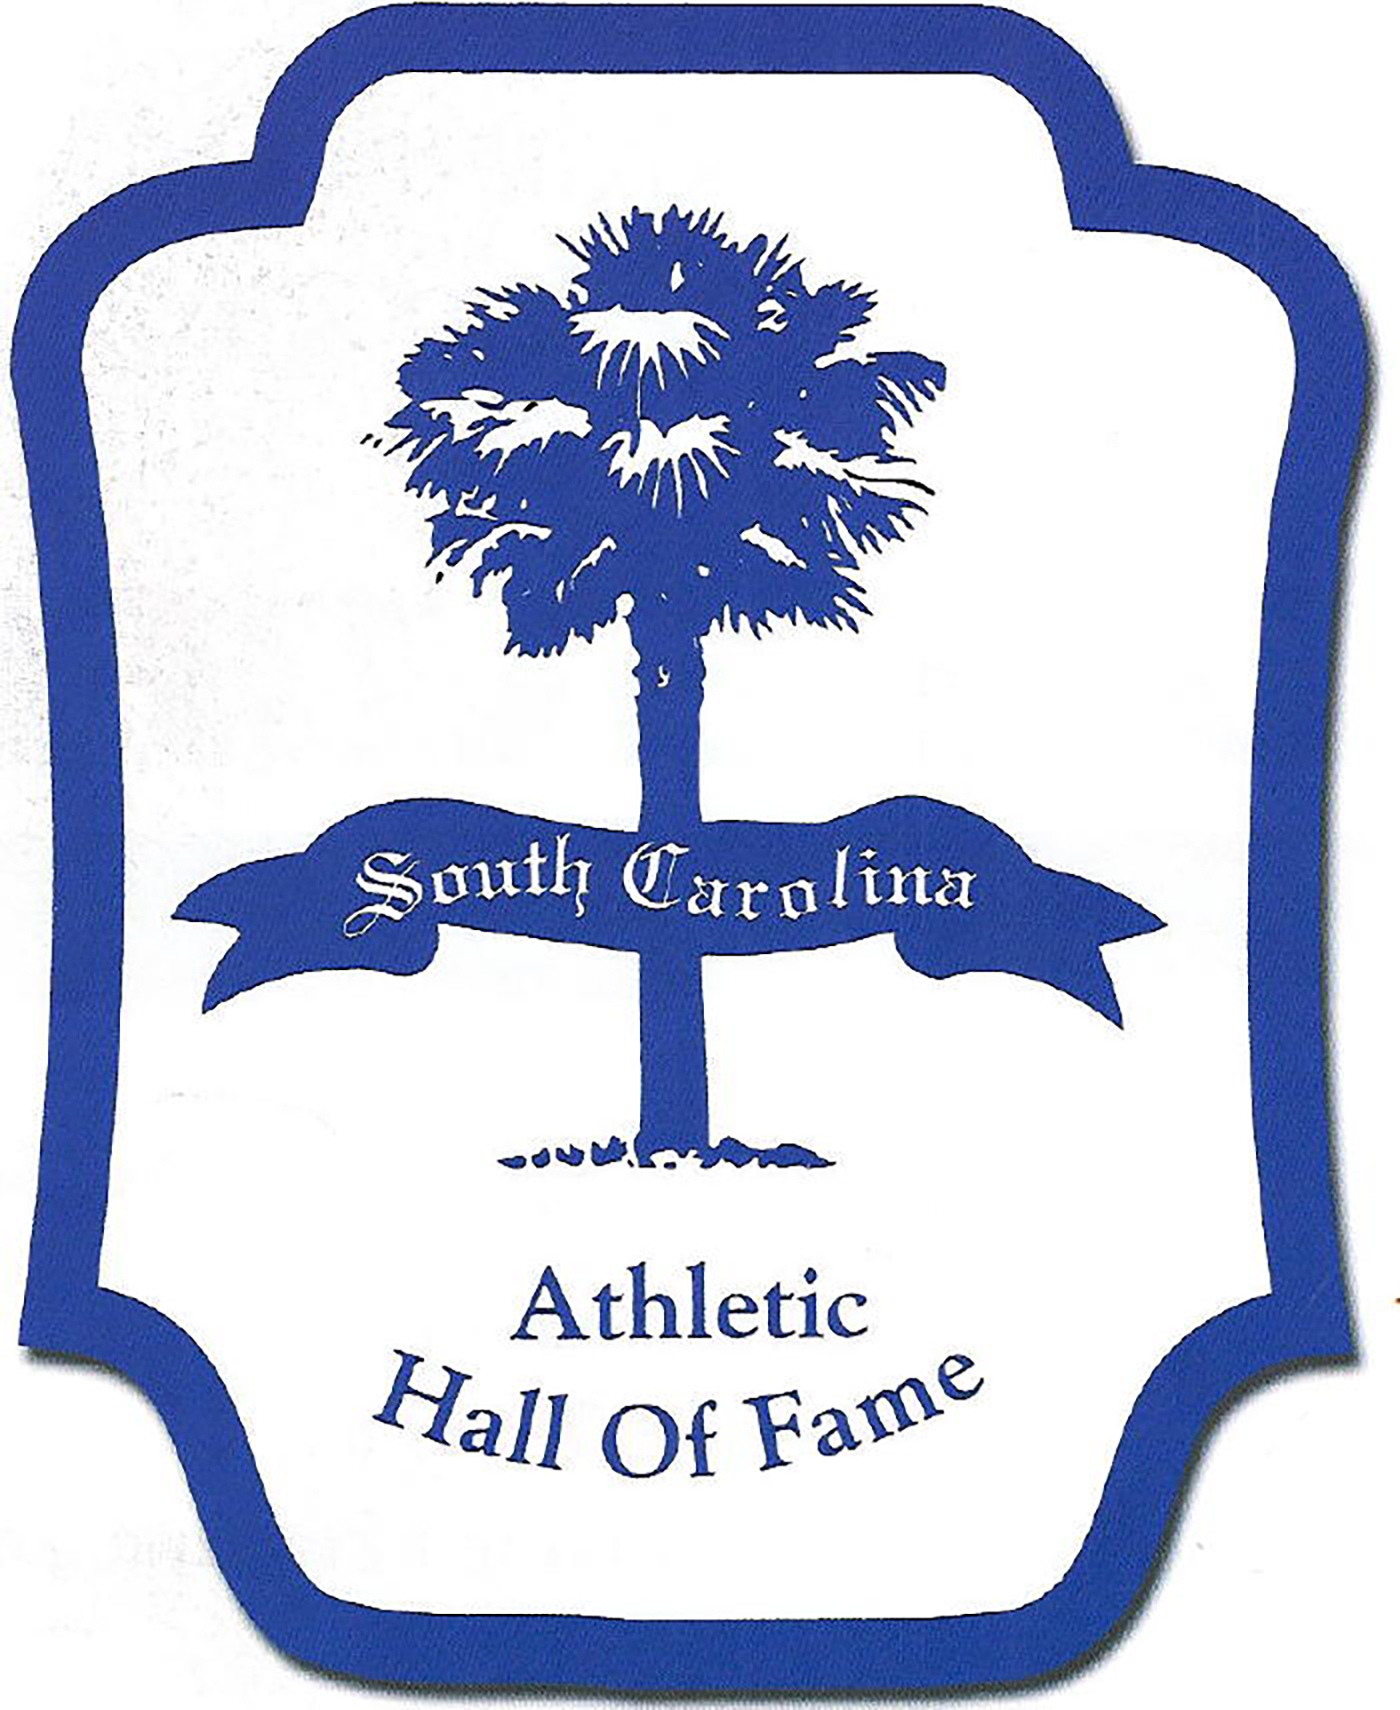 John Abraham, Nancy Wilson Headline the SC Athletic Hall of Fame Class of 2019